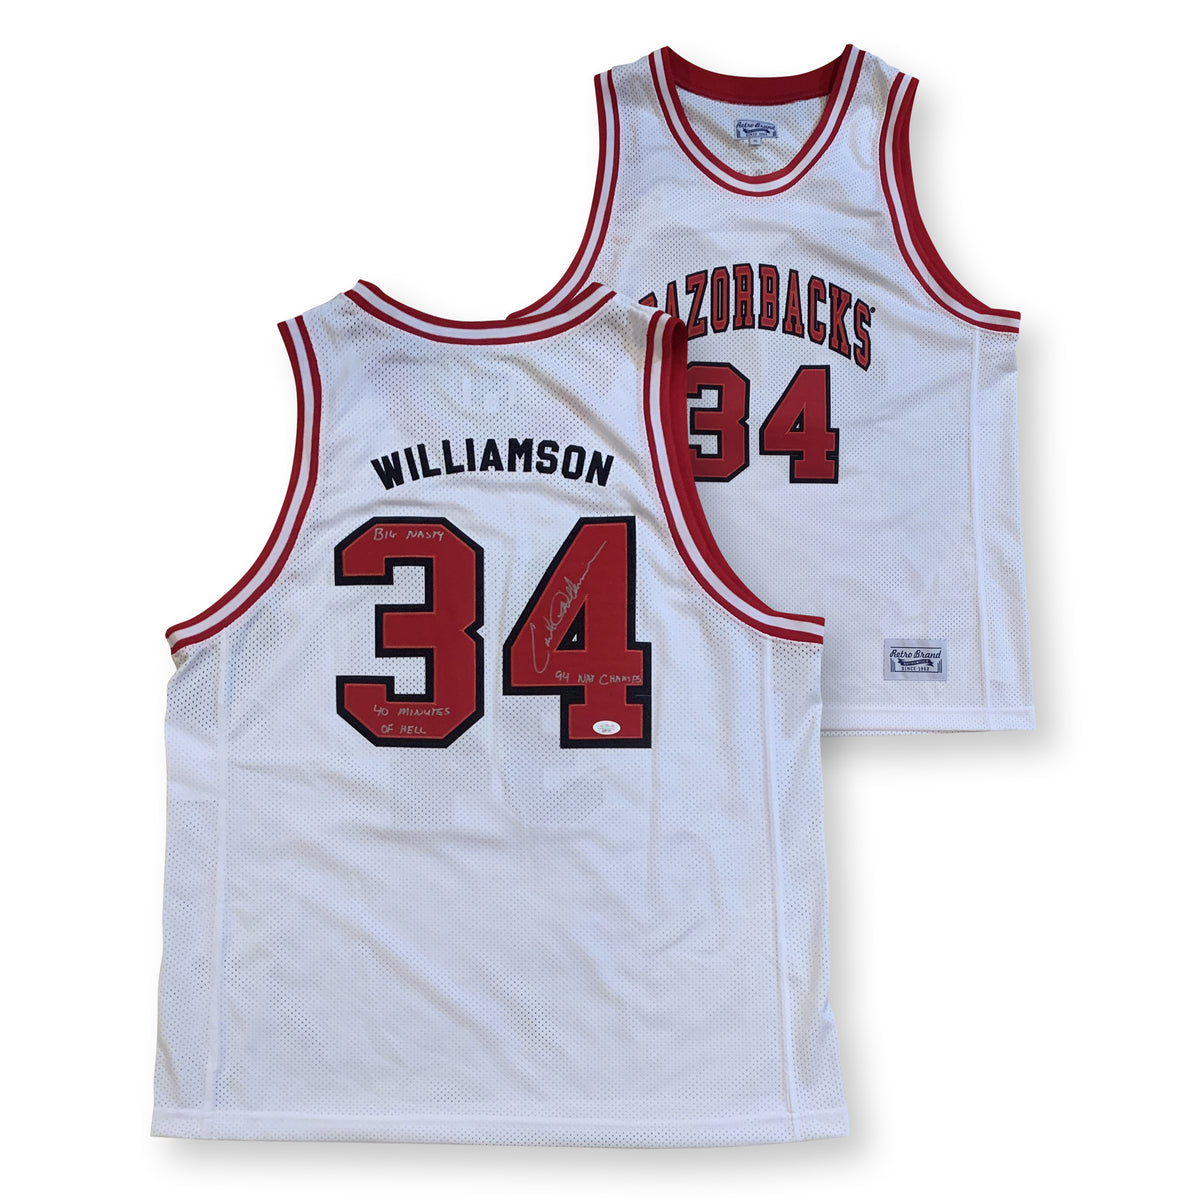 Dennis Rodman Signed Chicago Bulls The Worm Jersey (JSA COA)